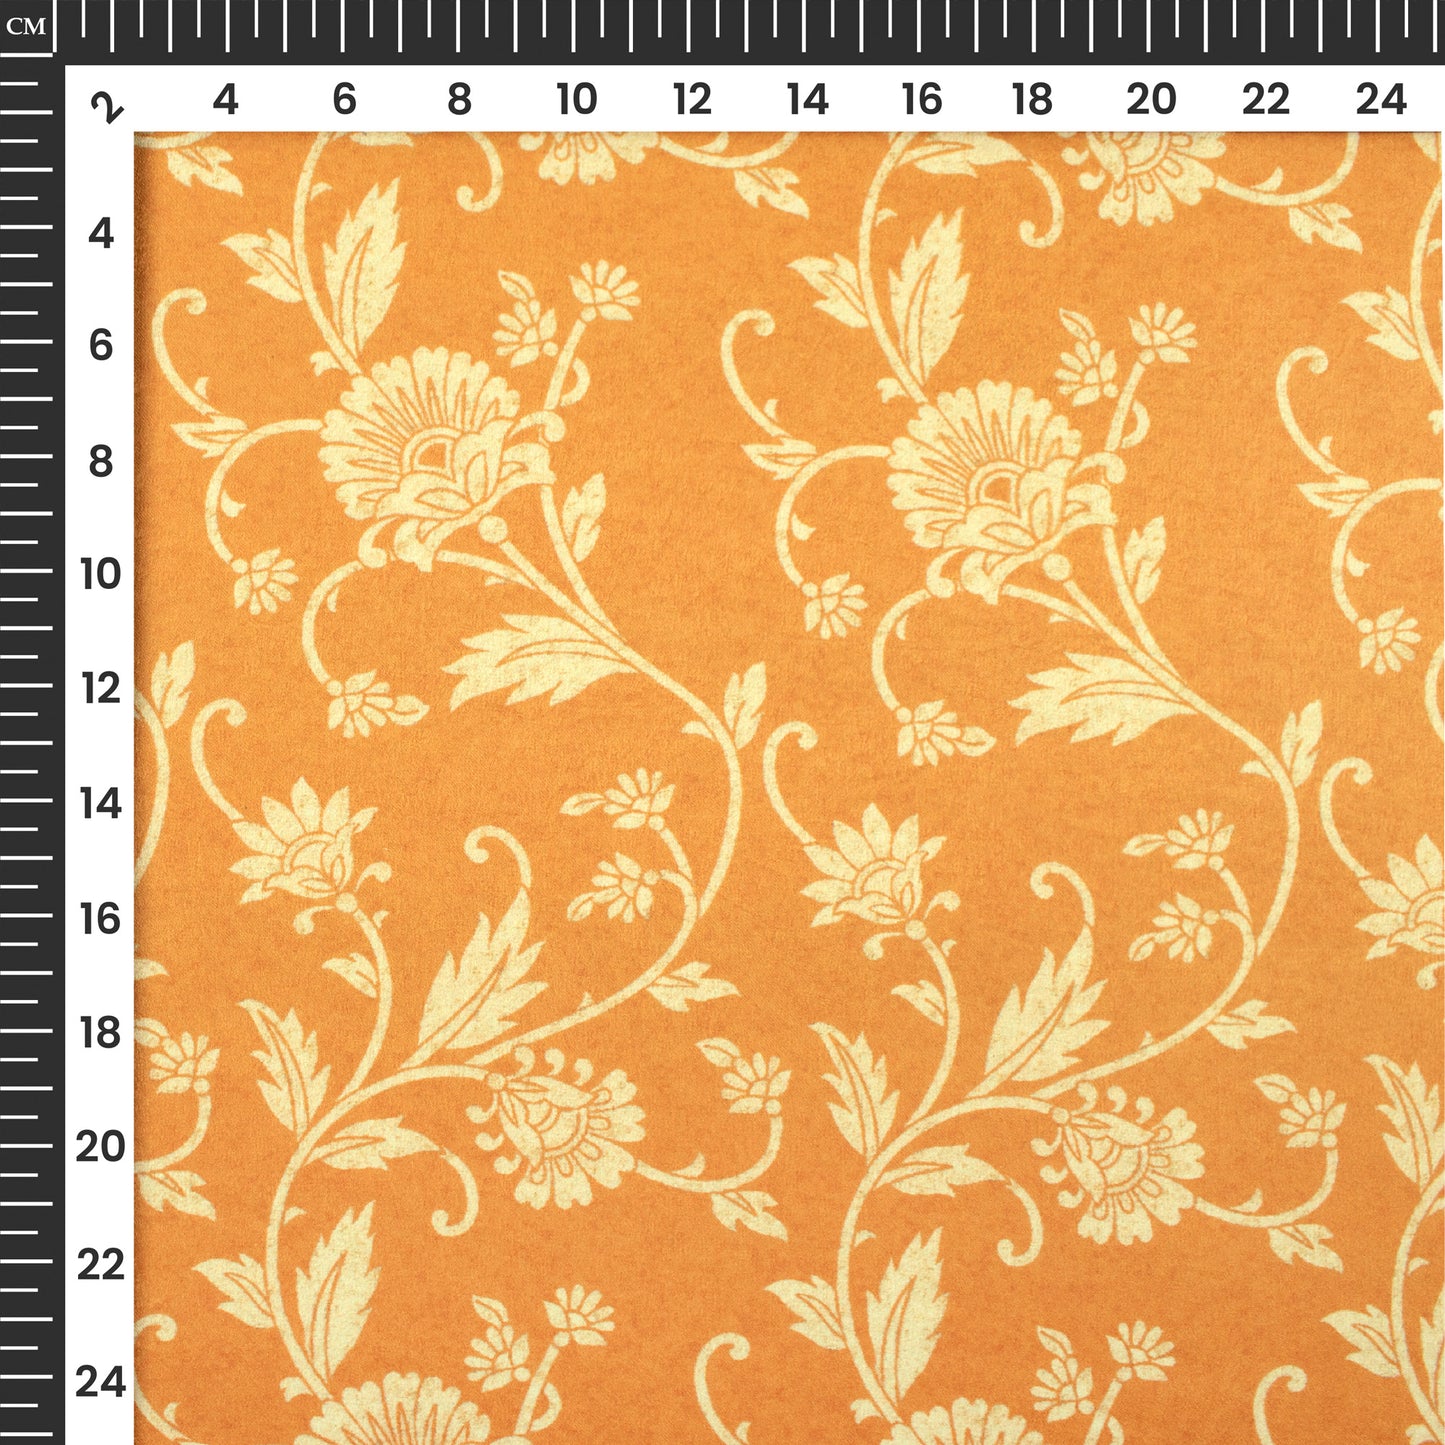 Stylish Floral Digital Print Lush Satin Fabric